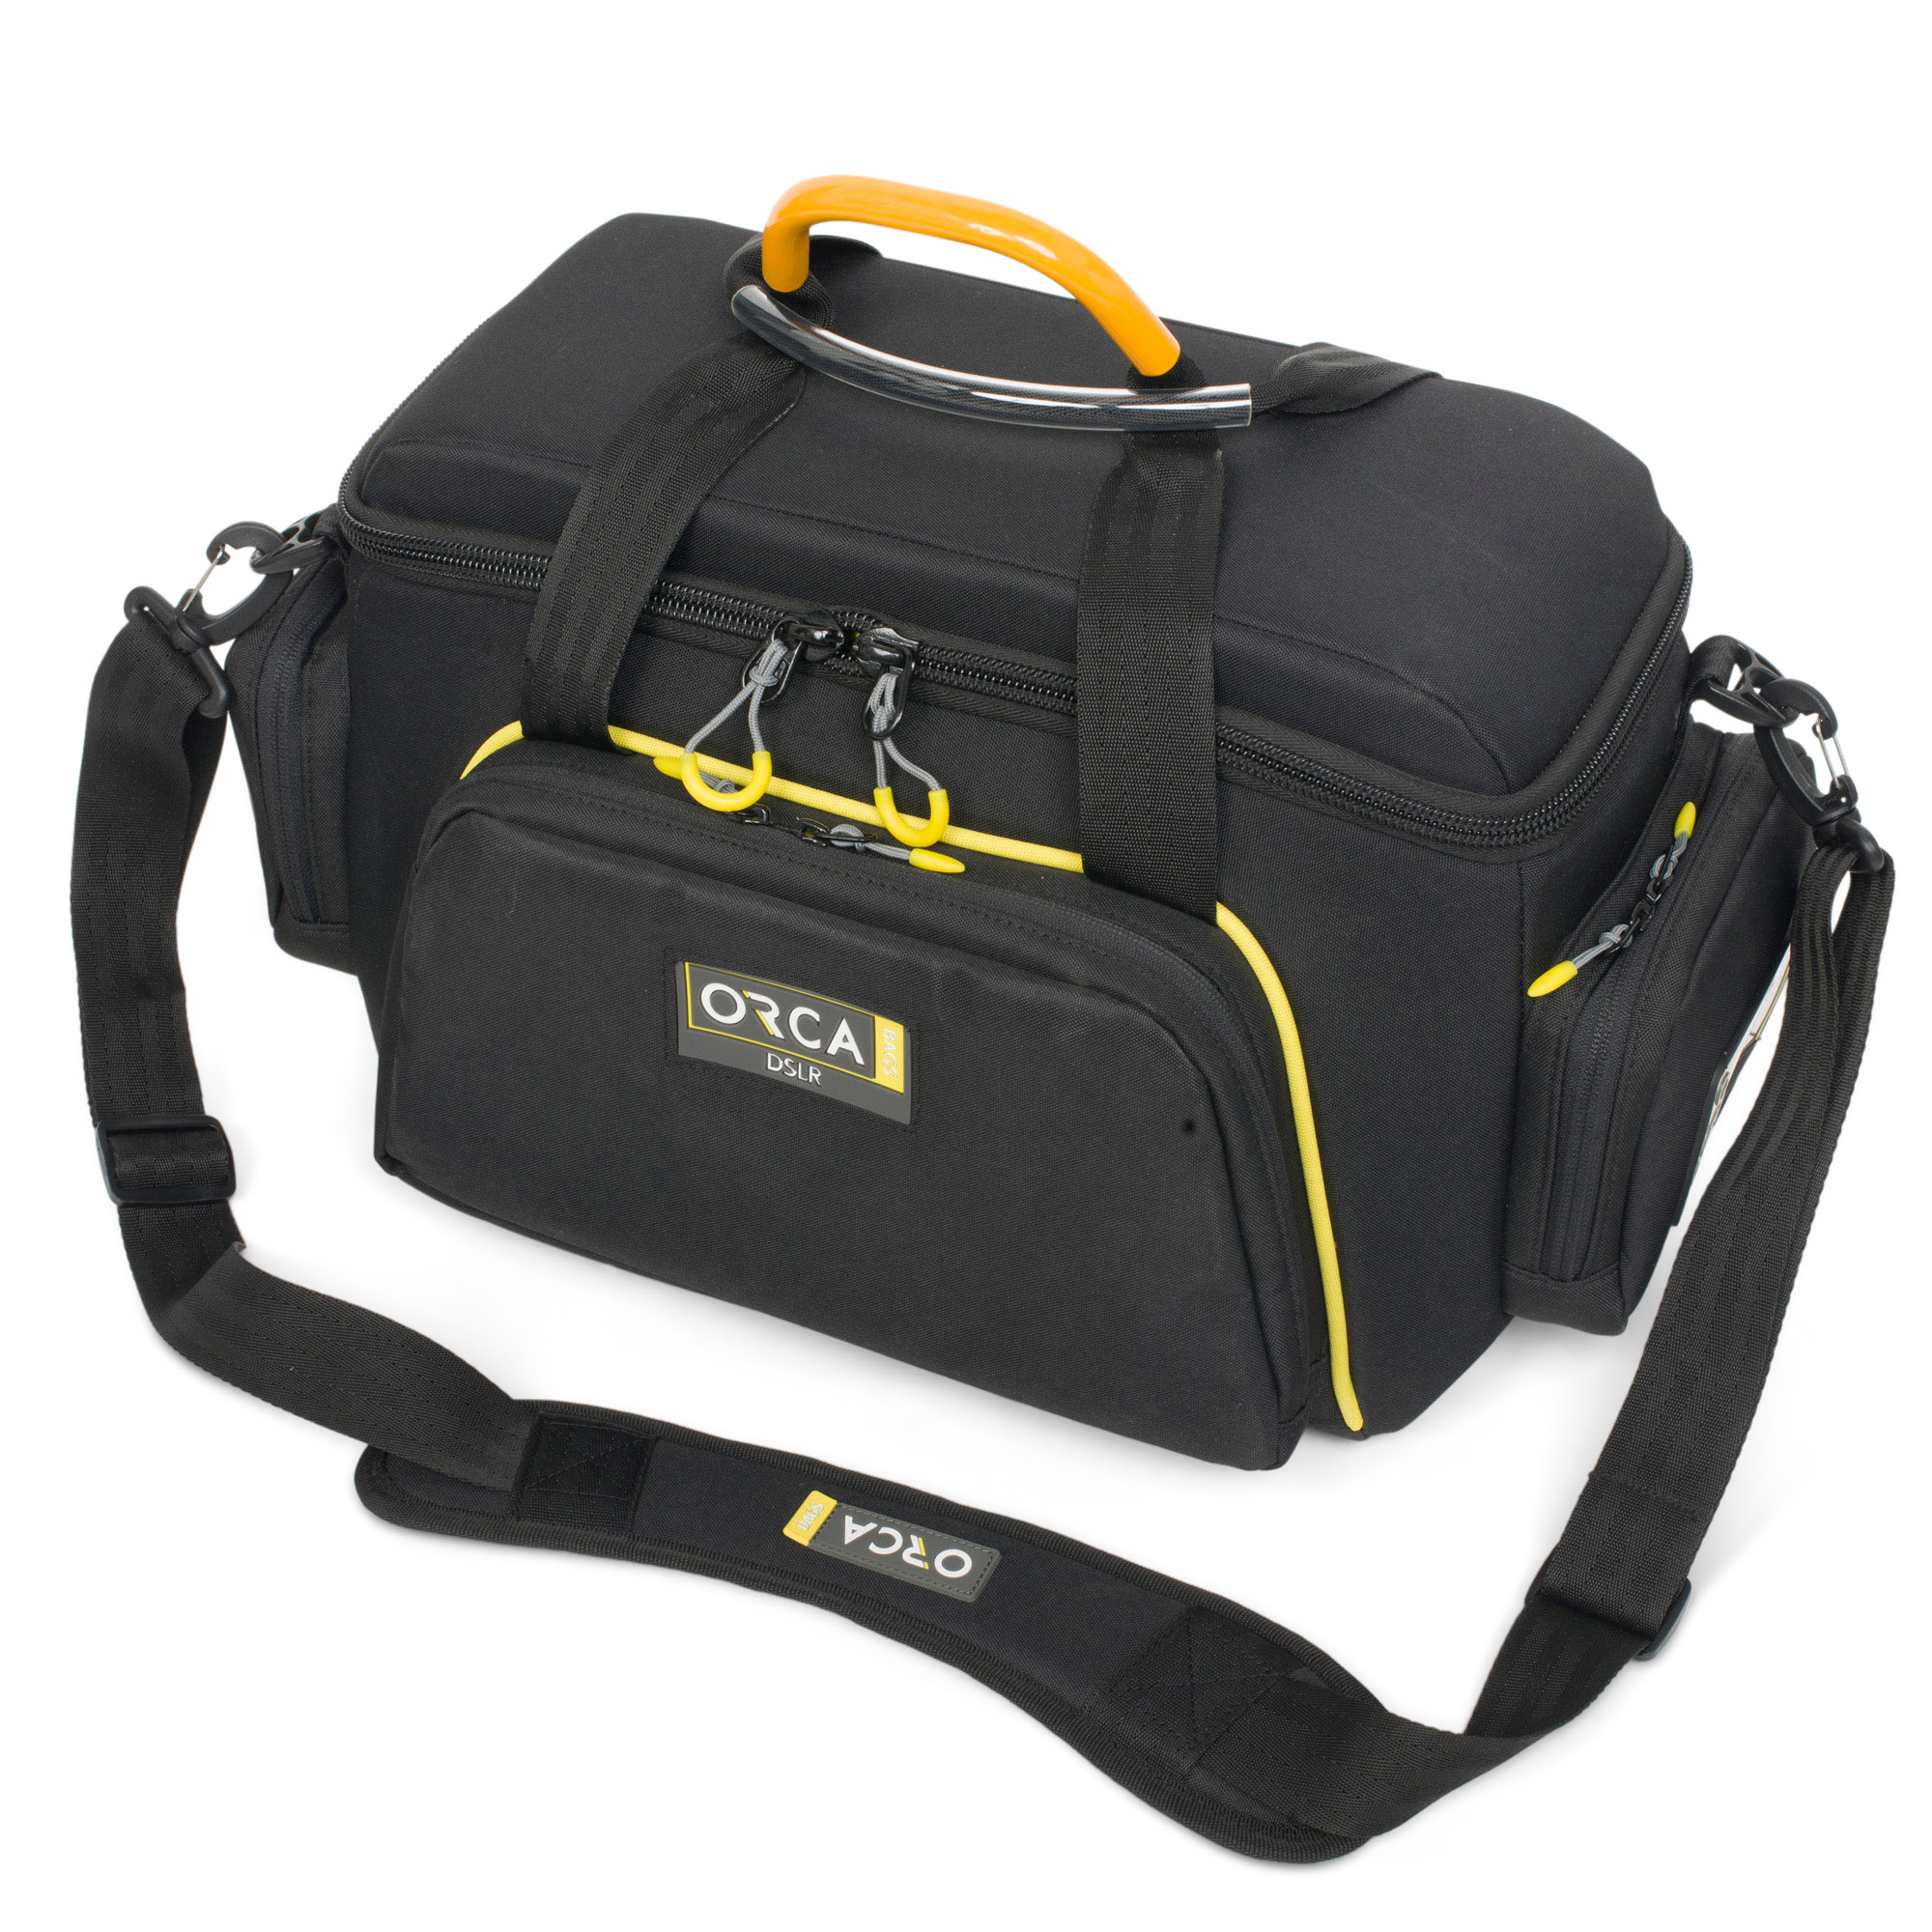 Orca DSLR - Shoulder Bag for small camera